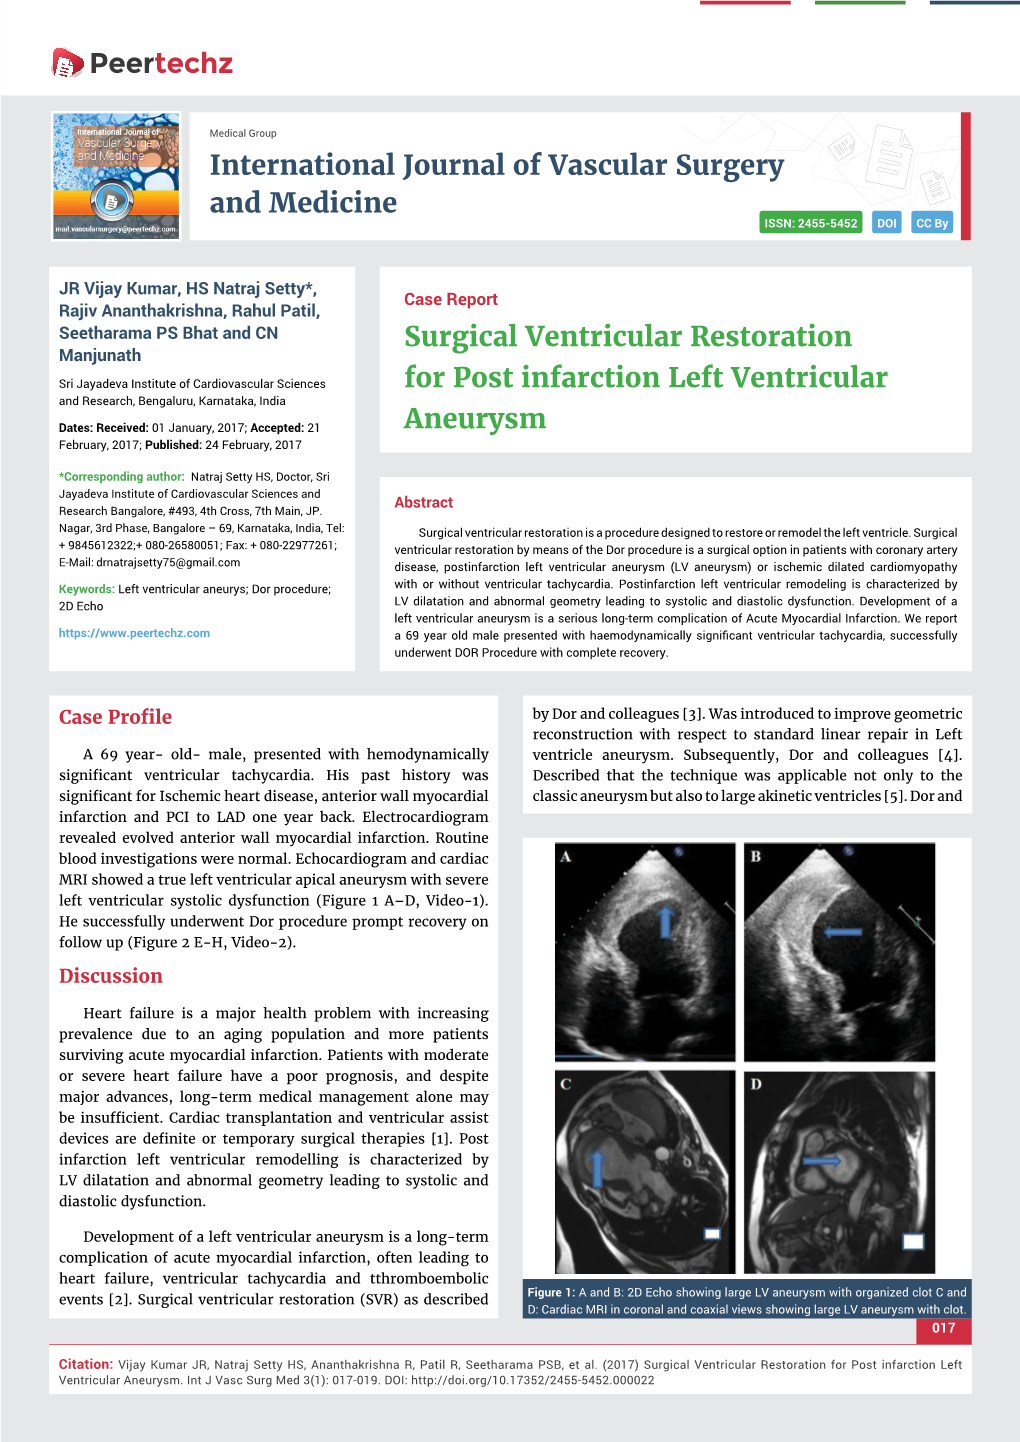 Surgical Ventricular Restoration for Post Infarction Left Ventricular Aneurysm